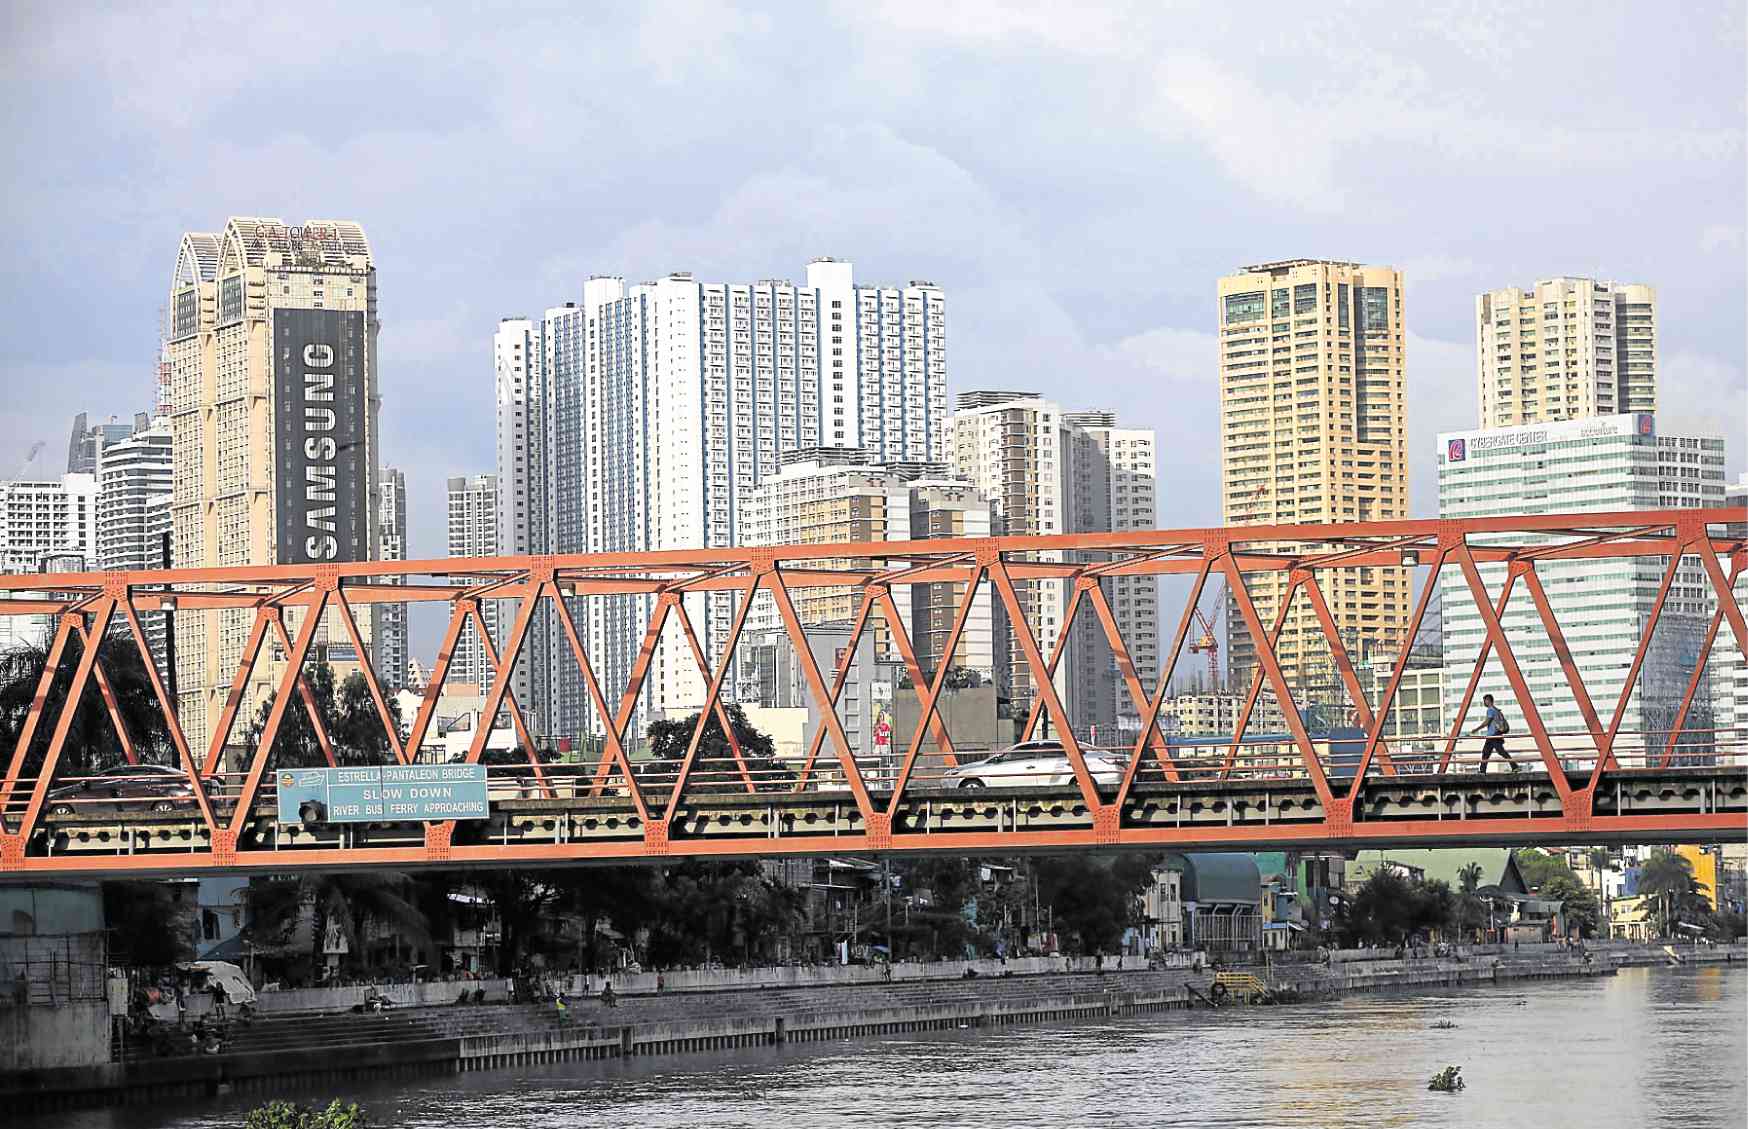 'Wala nang atrasan': Estrella-Pantaleon Bridge's 30-month closure to start Jan. 19